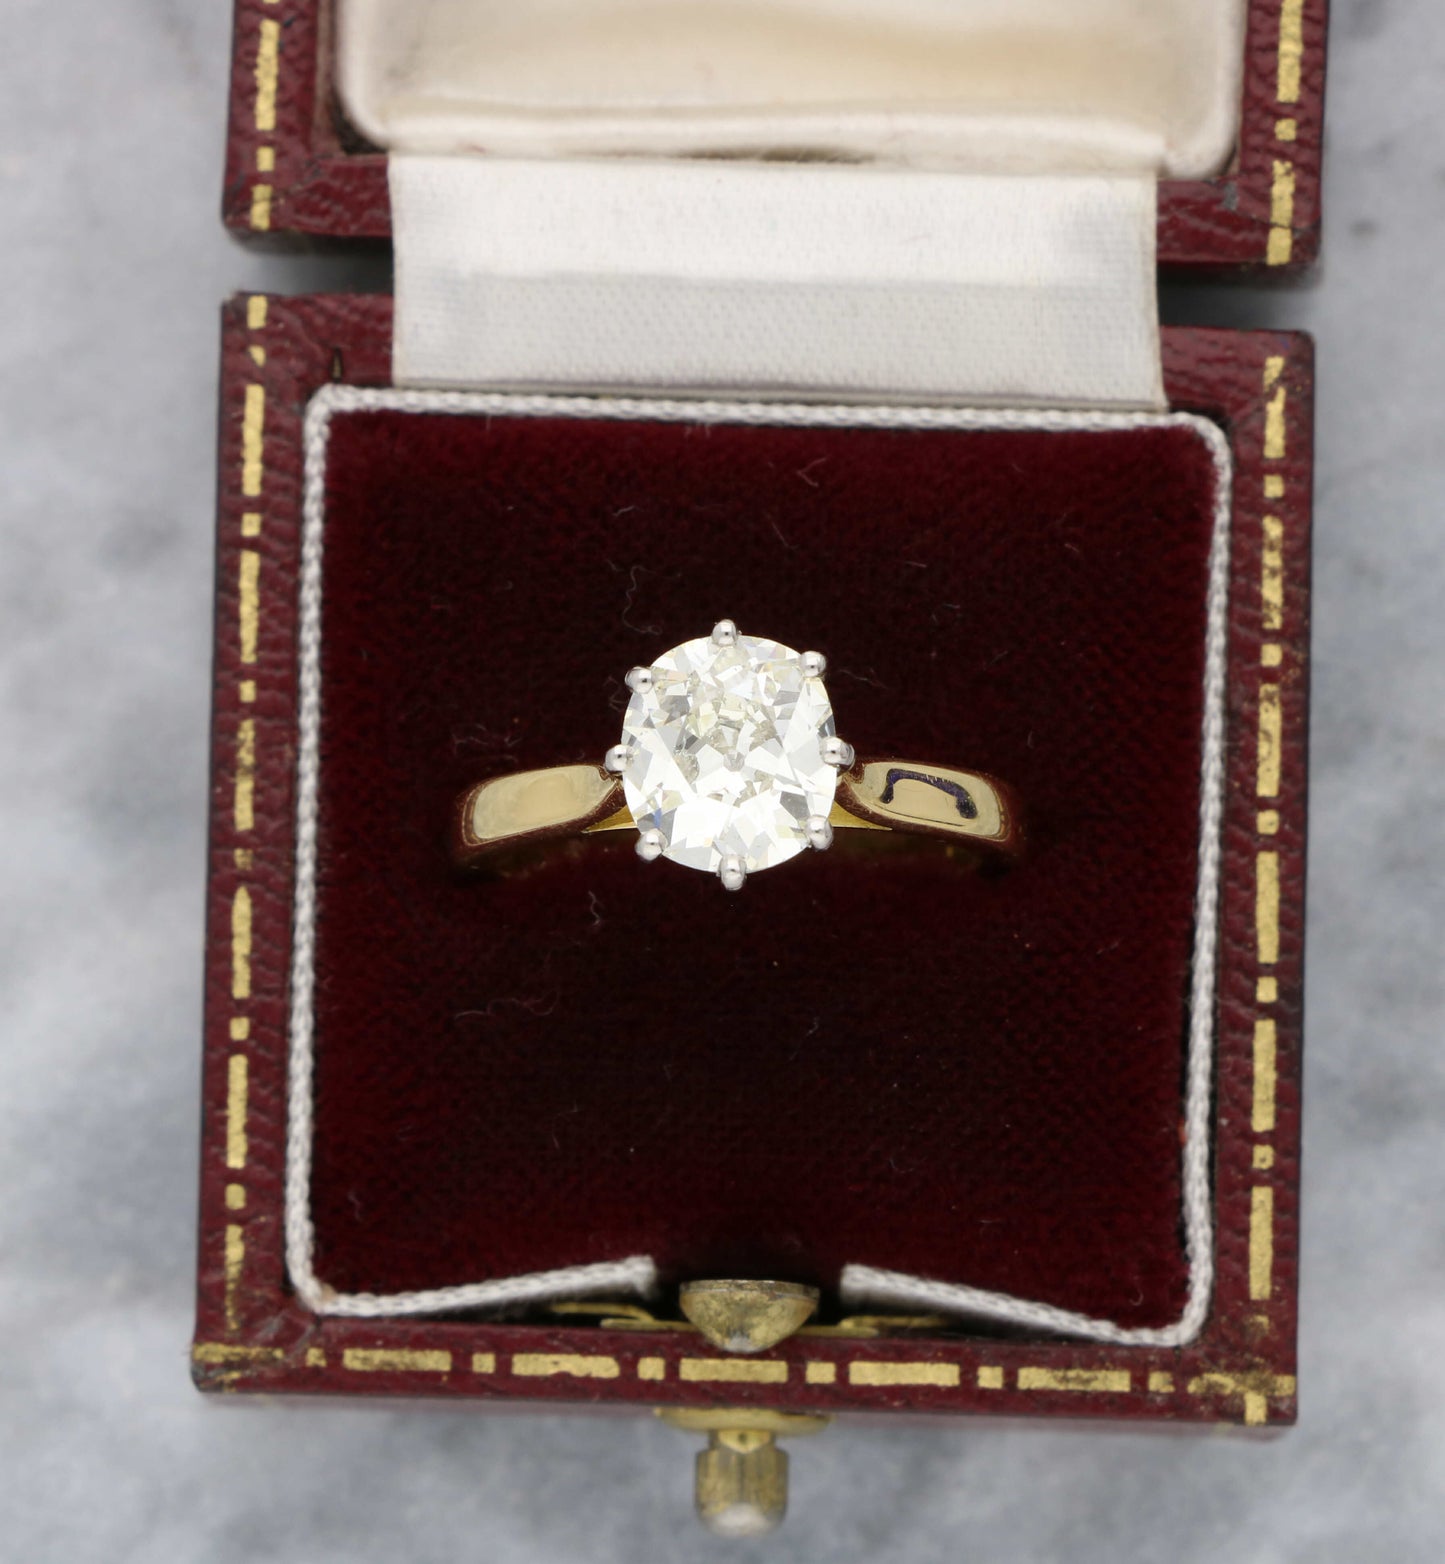 2.05ct old cut cushion diamond engagement ring